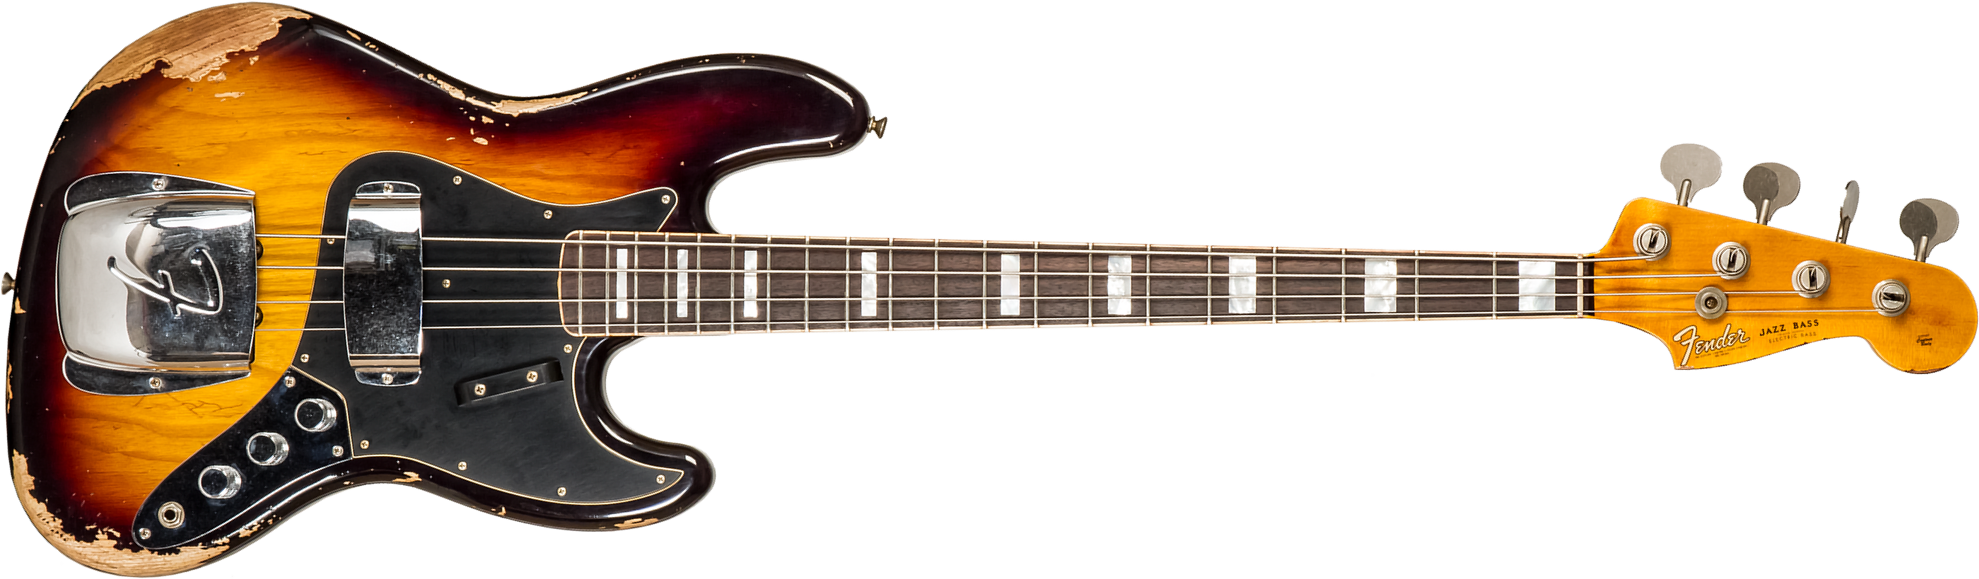 Fender Custom Shop Jazz Bass Custom Rw #cz575919 - Heavy Relic 3-color Sunburst - Solidbody E-bass - Main picture